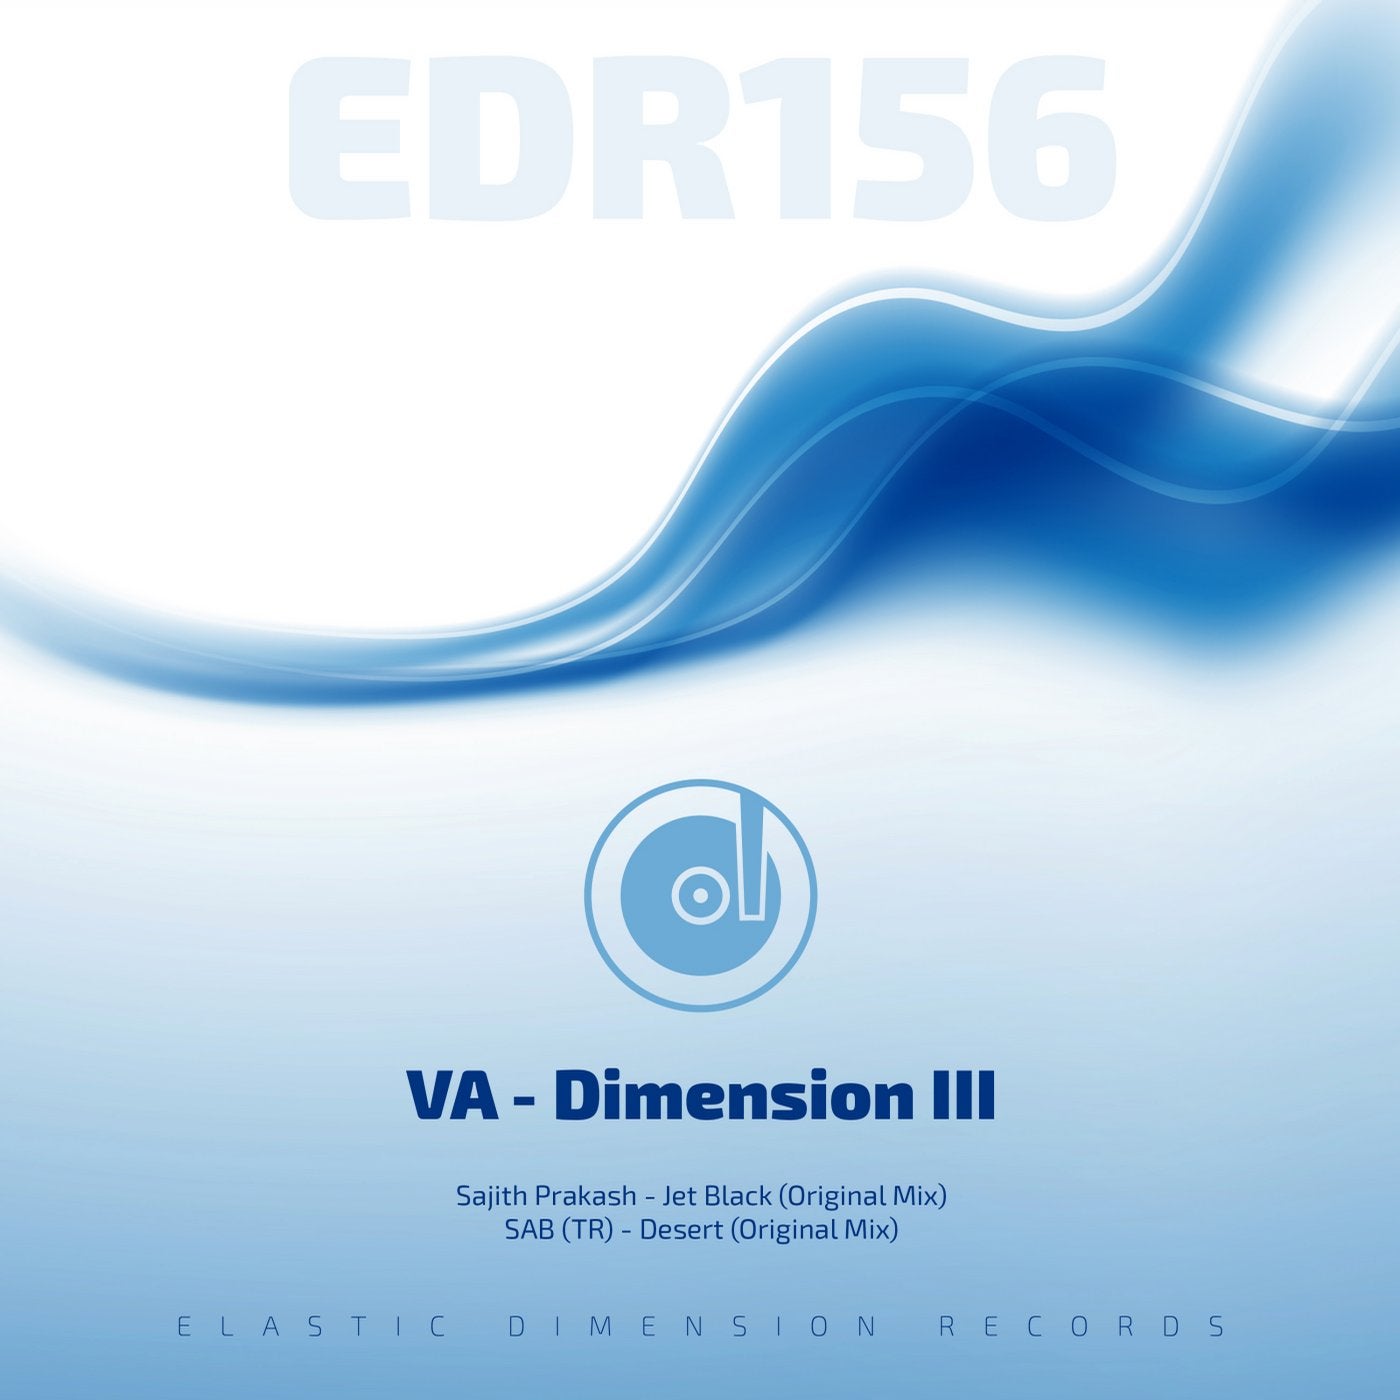 VA - Dimension III